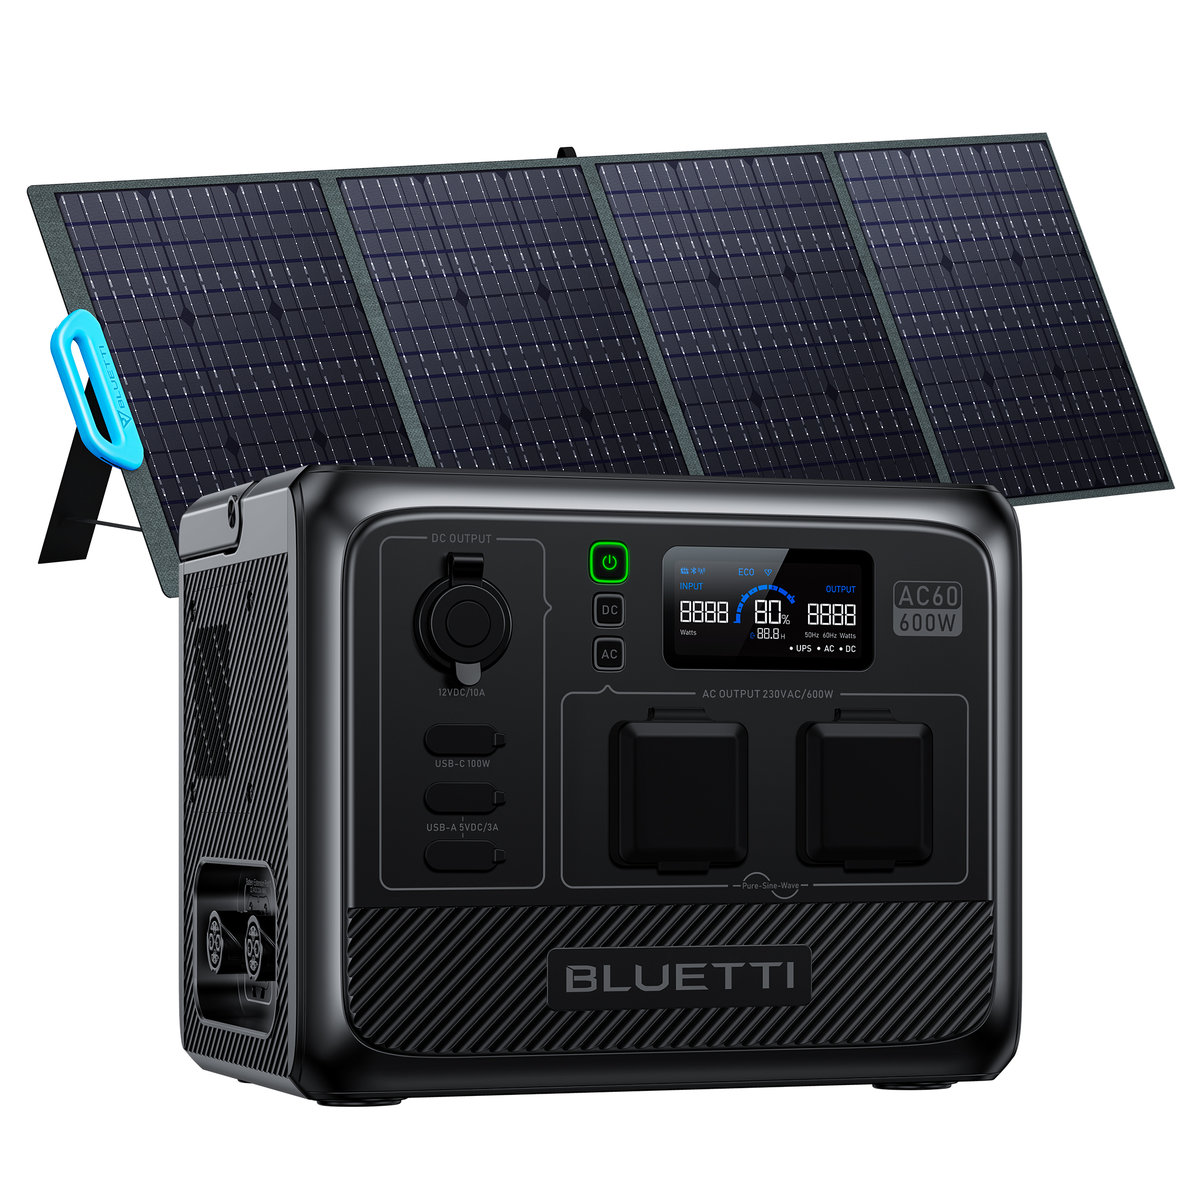 BLUETTI AC60 Portable Power Station (403Wh)